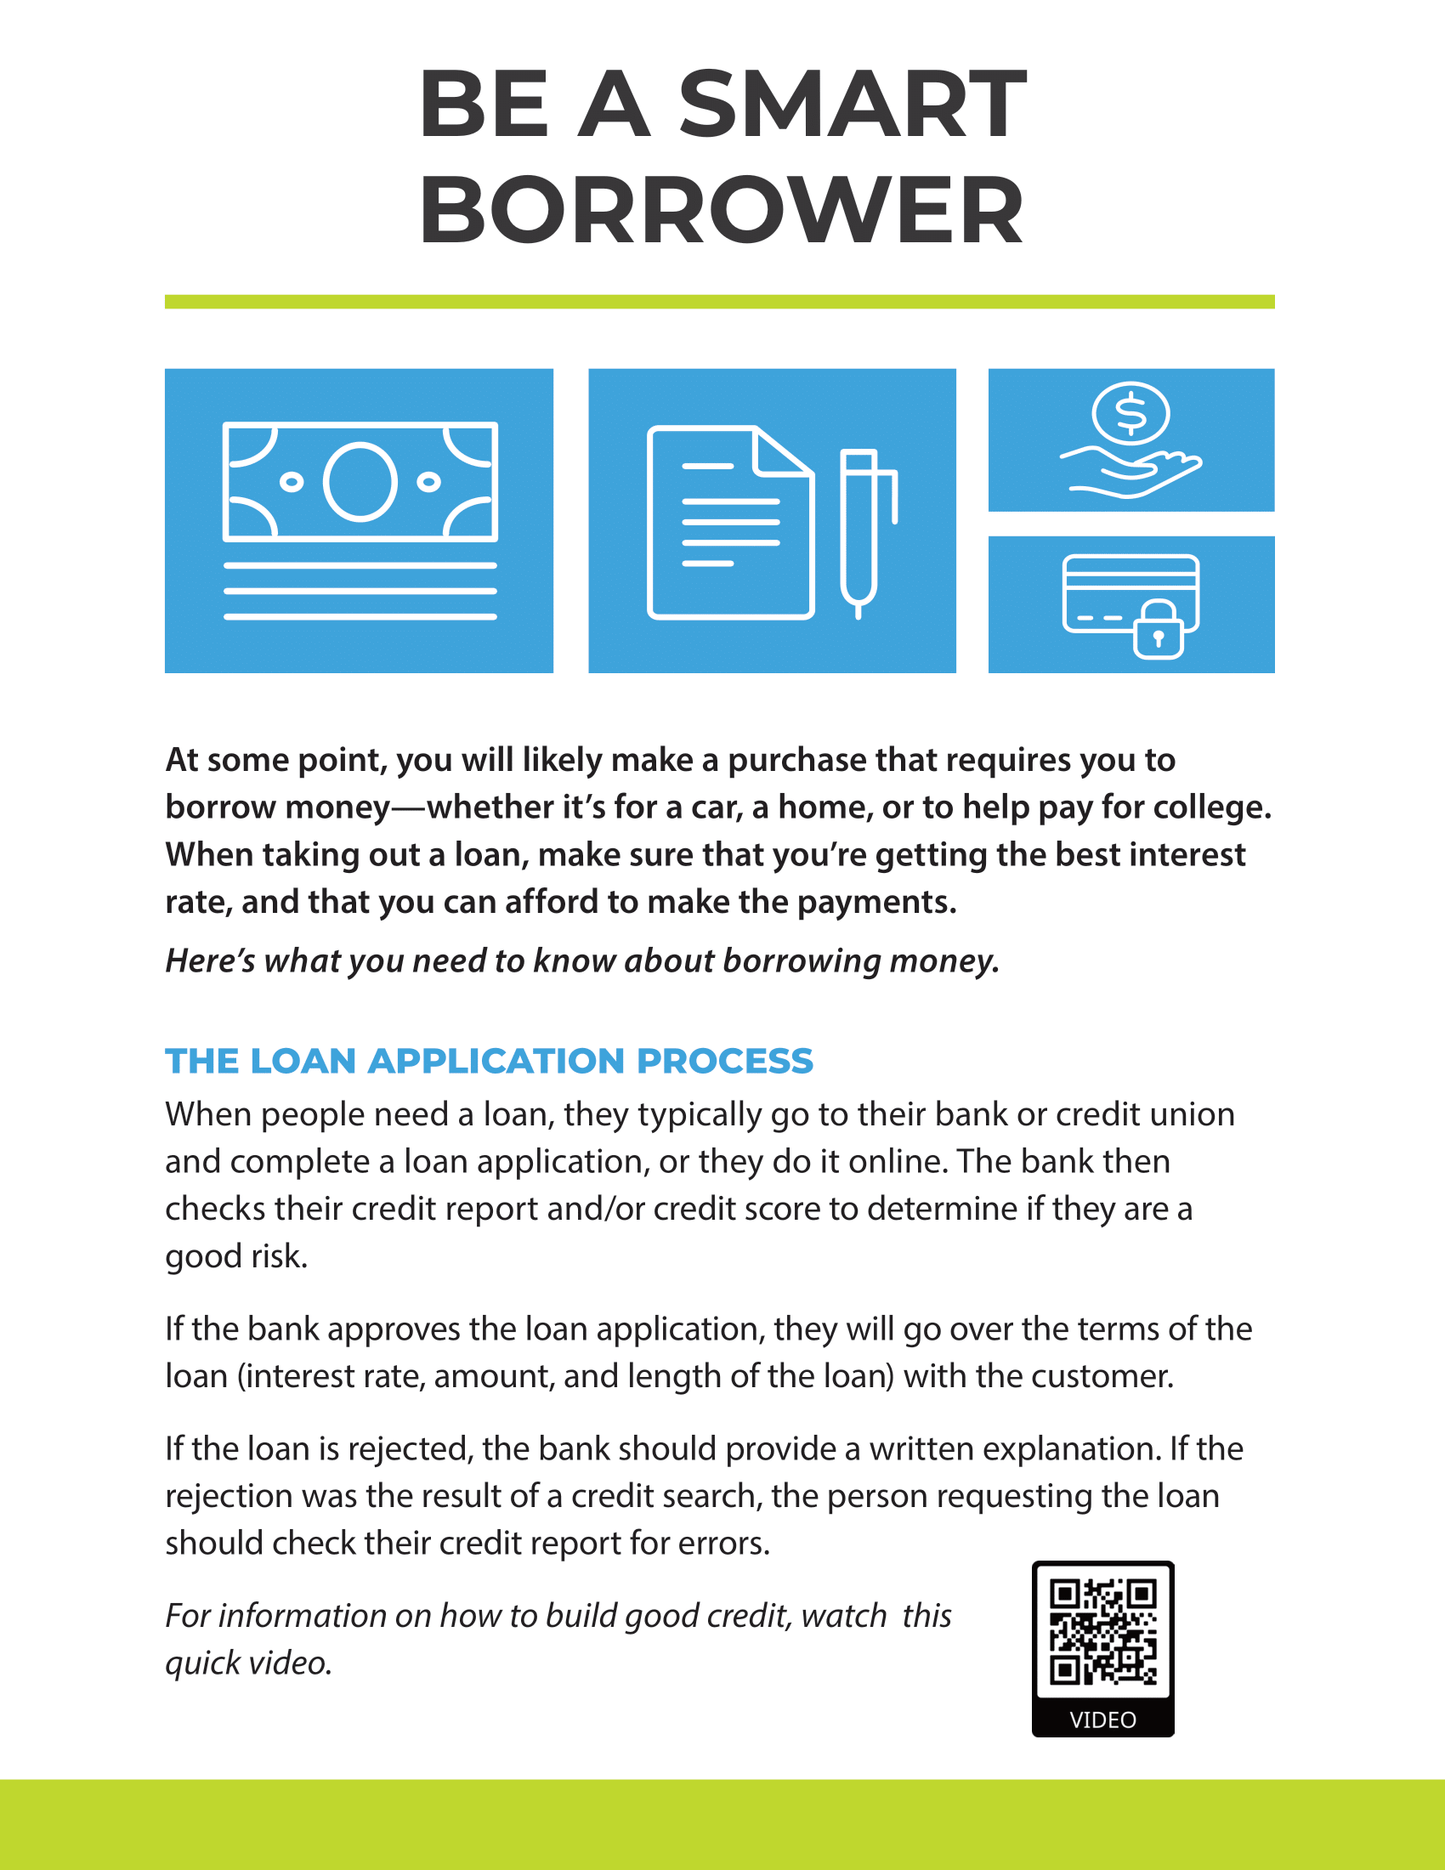 Be a Smart Borrower